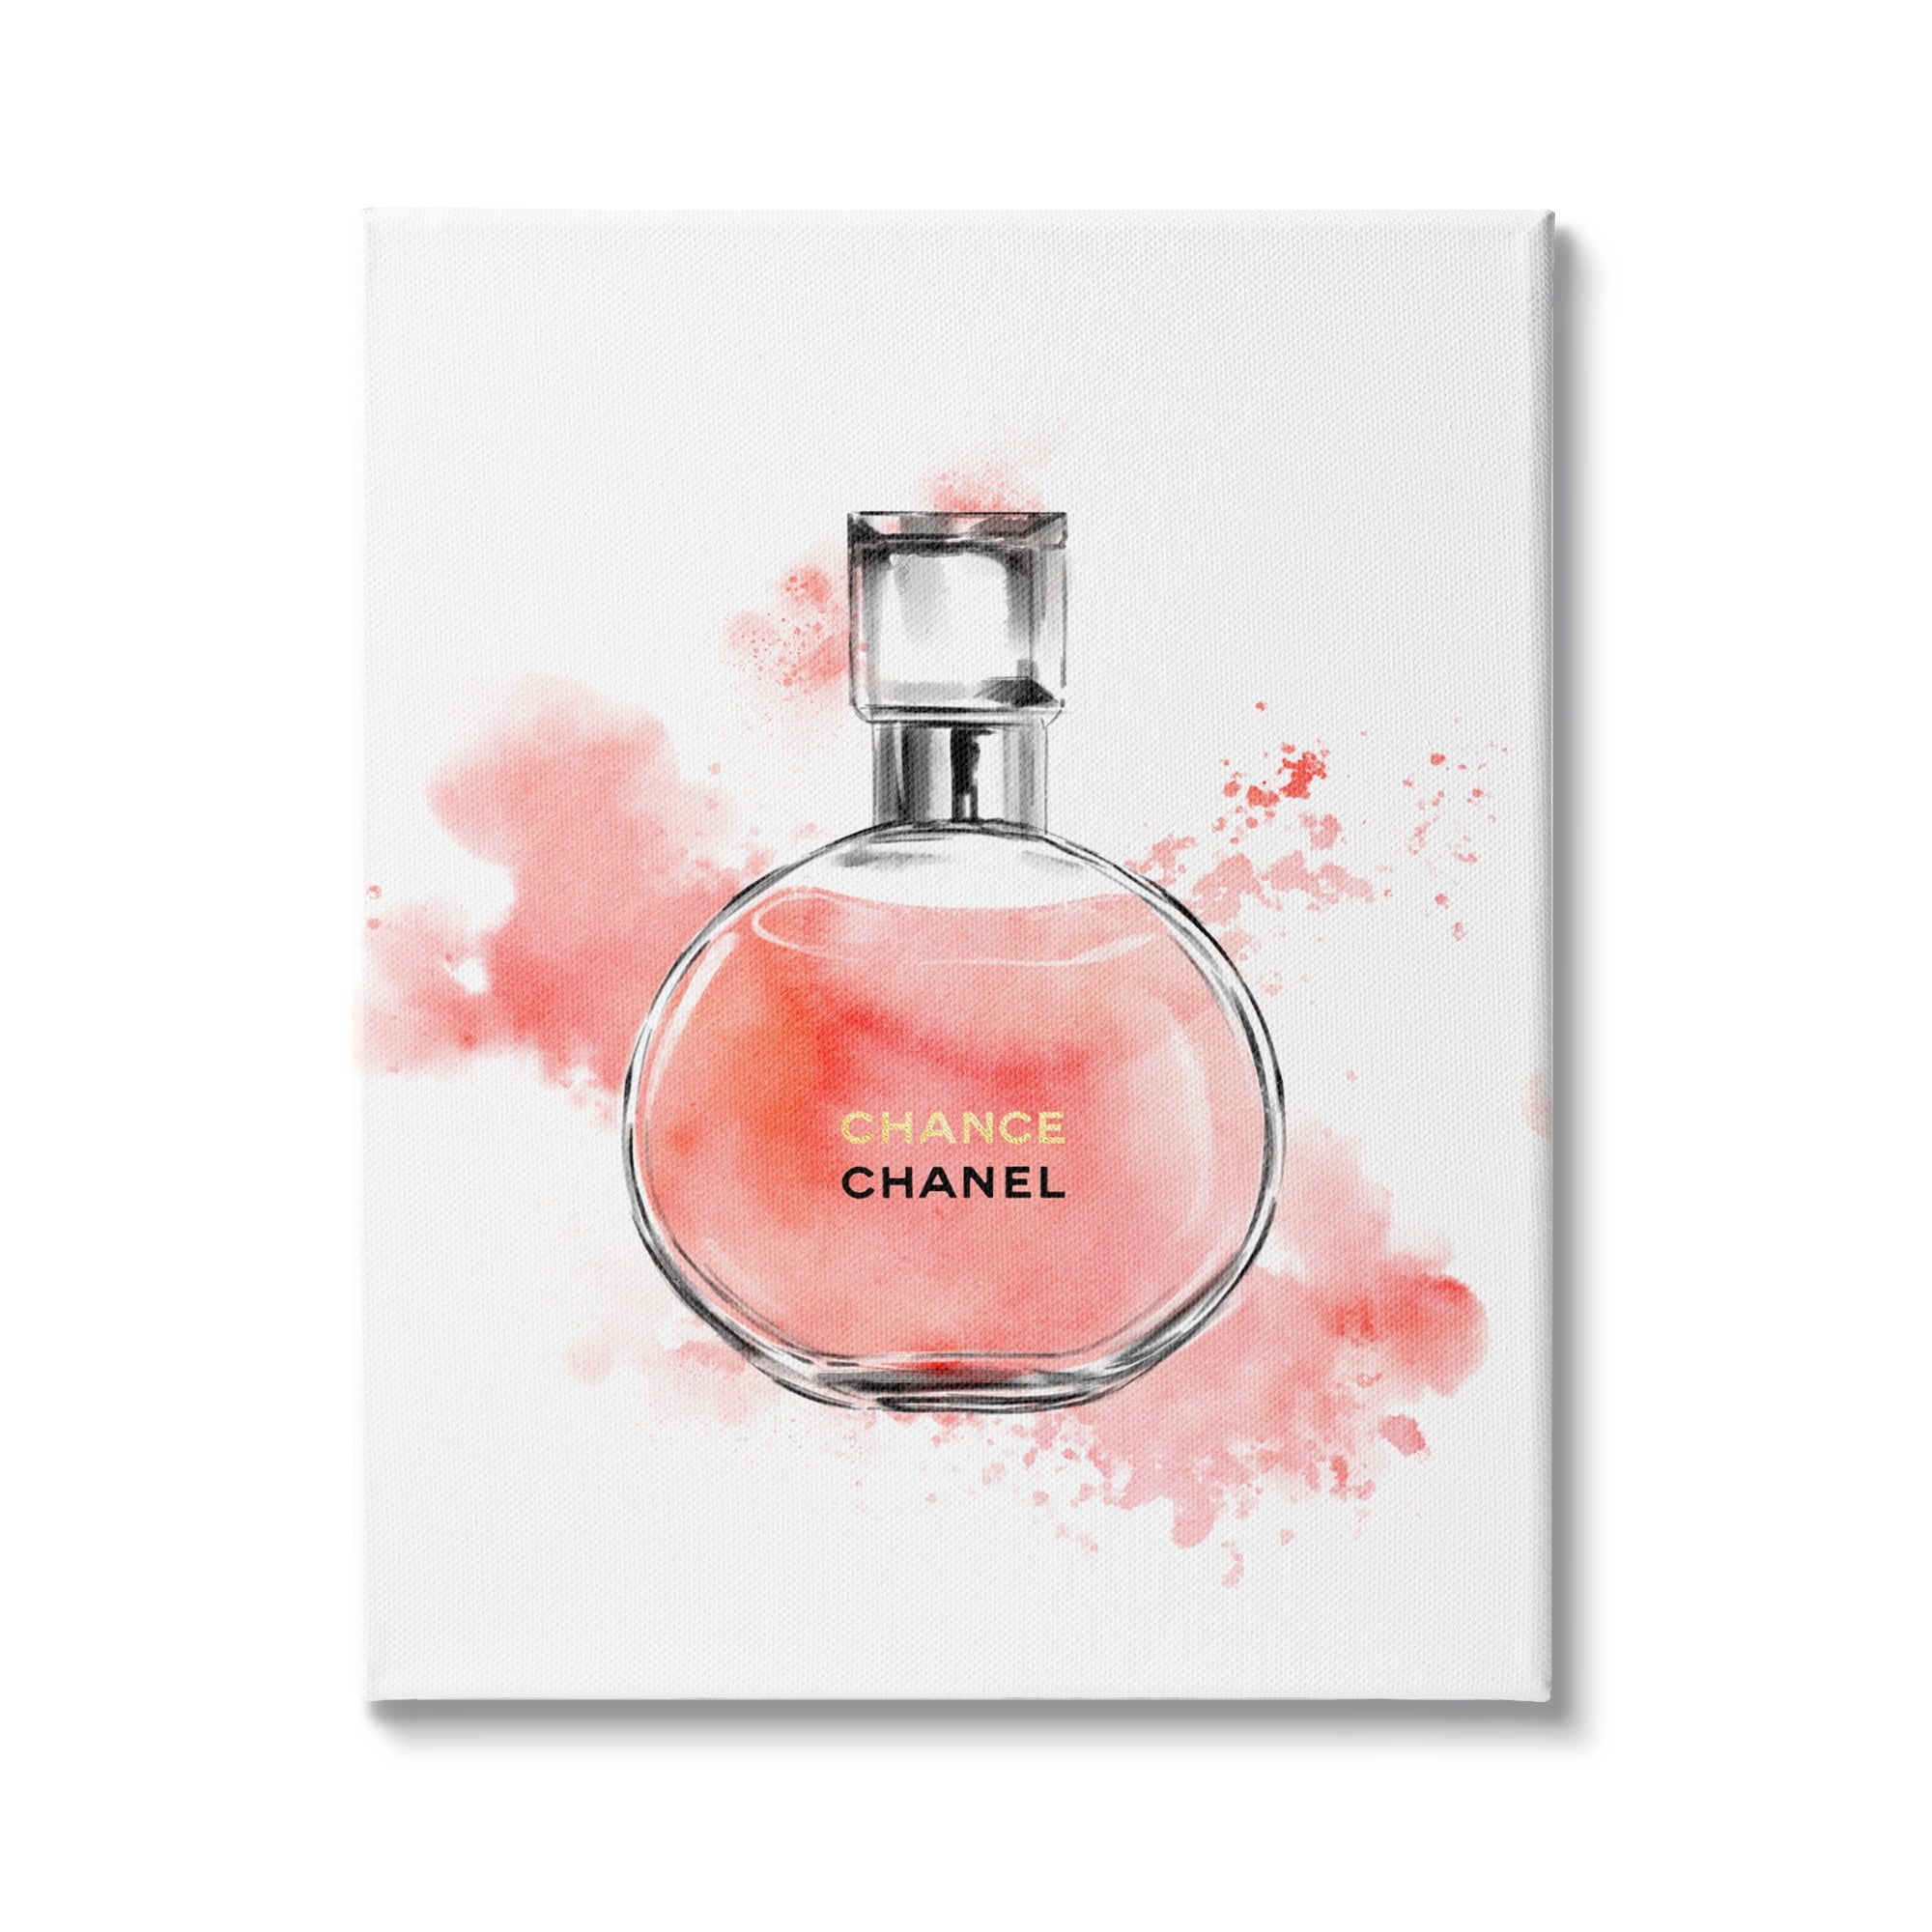 Stupell Industries Glam Perfume Bottle Splash Pink Gold 10x15 Wall Plaque Art